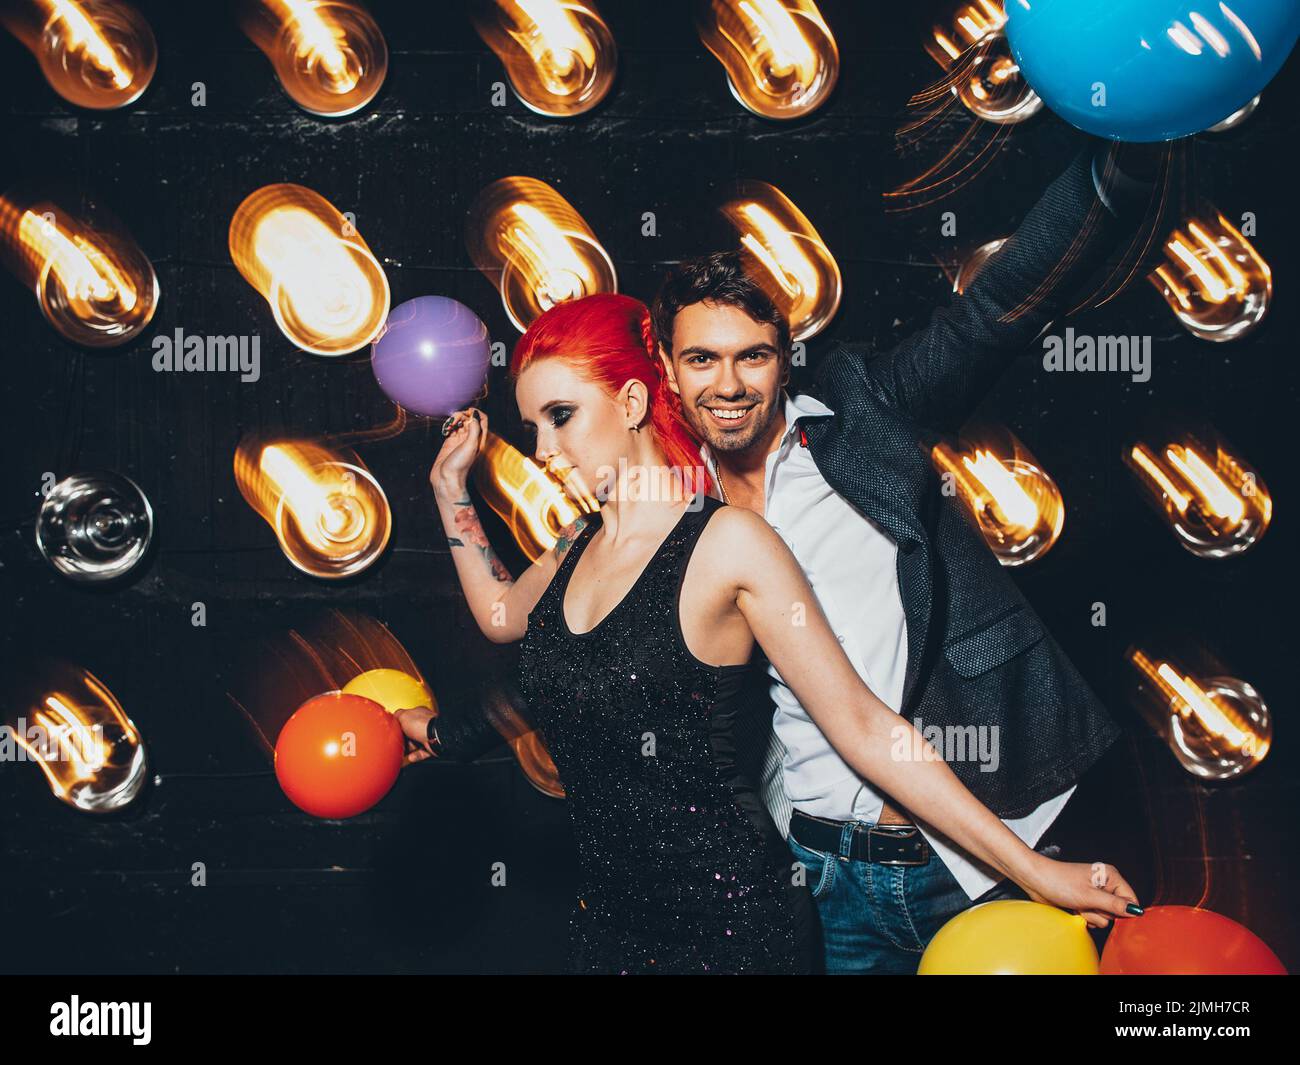 birthday party drunk couple dancing nightclub Stock Photo